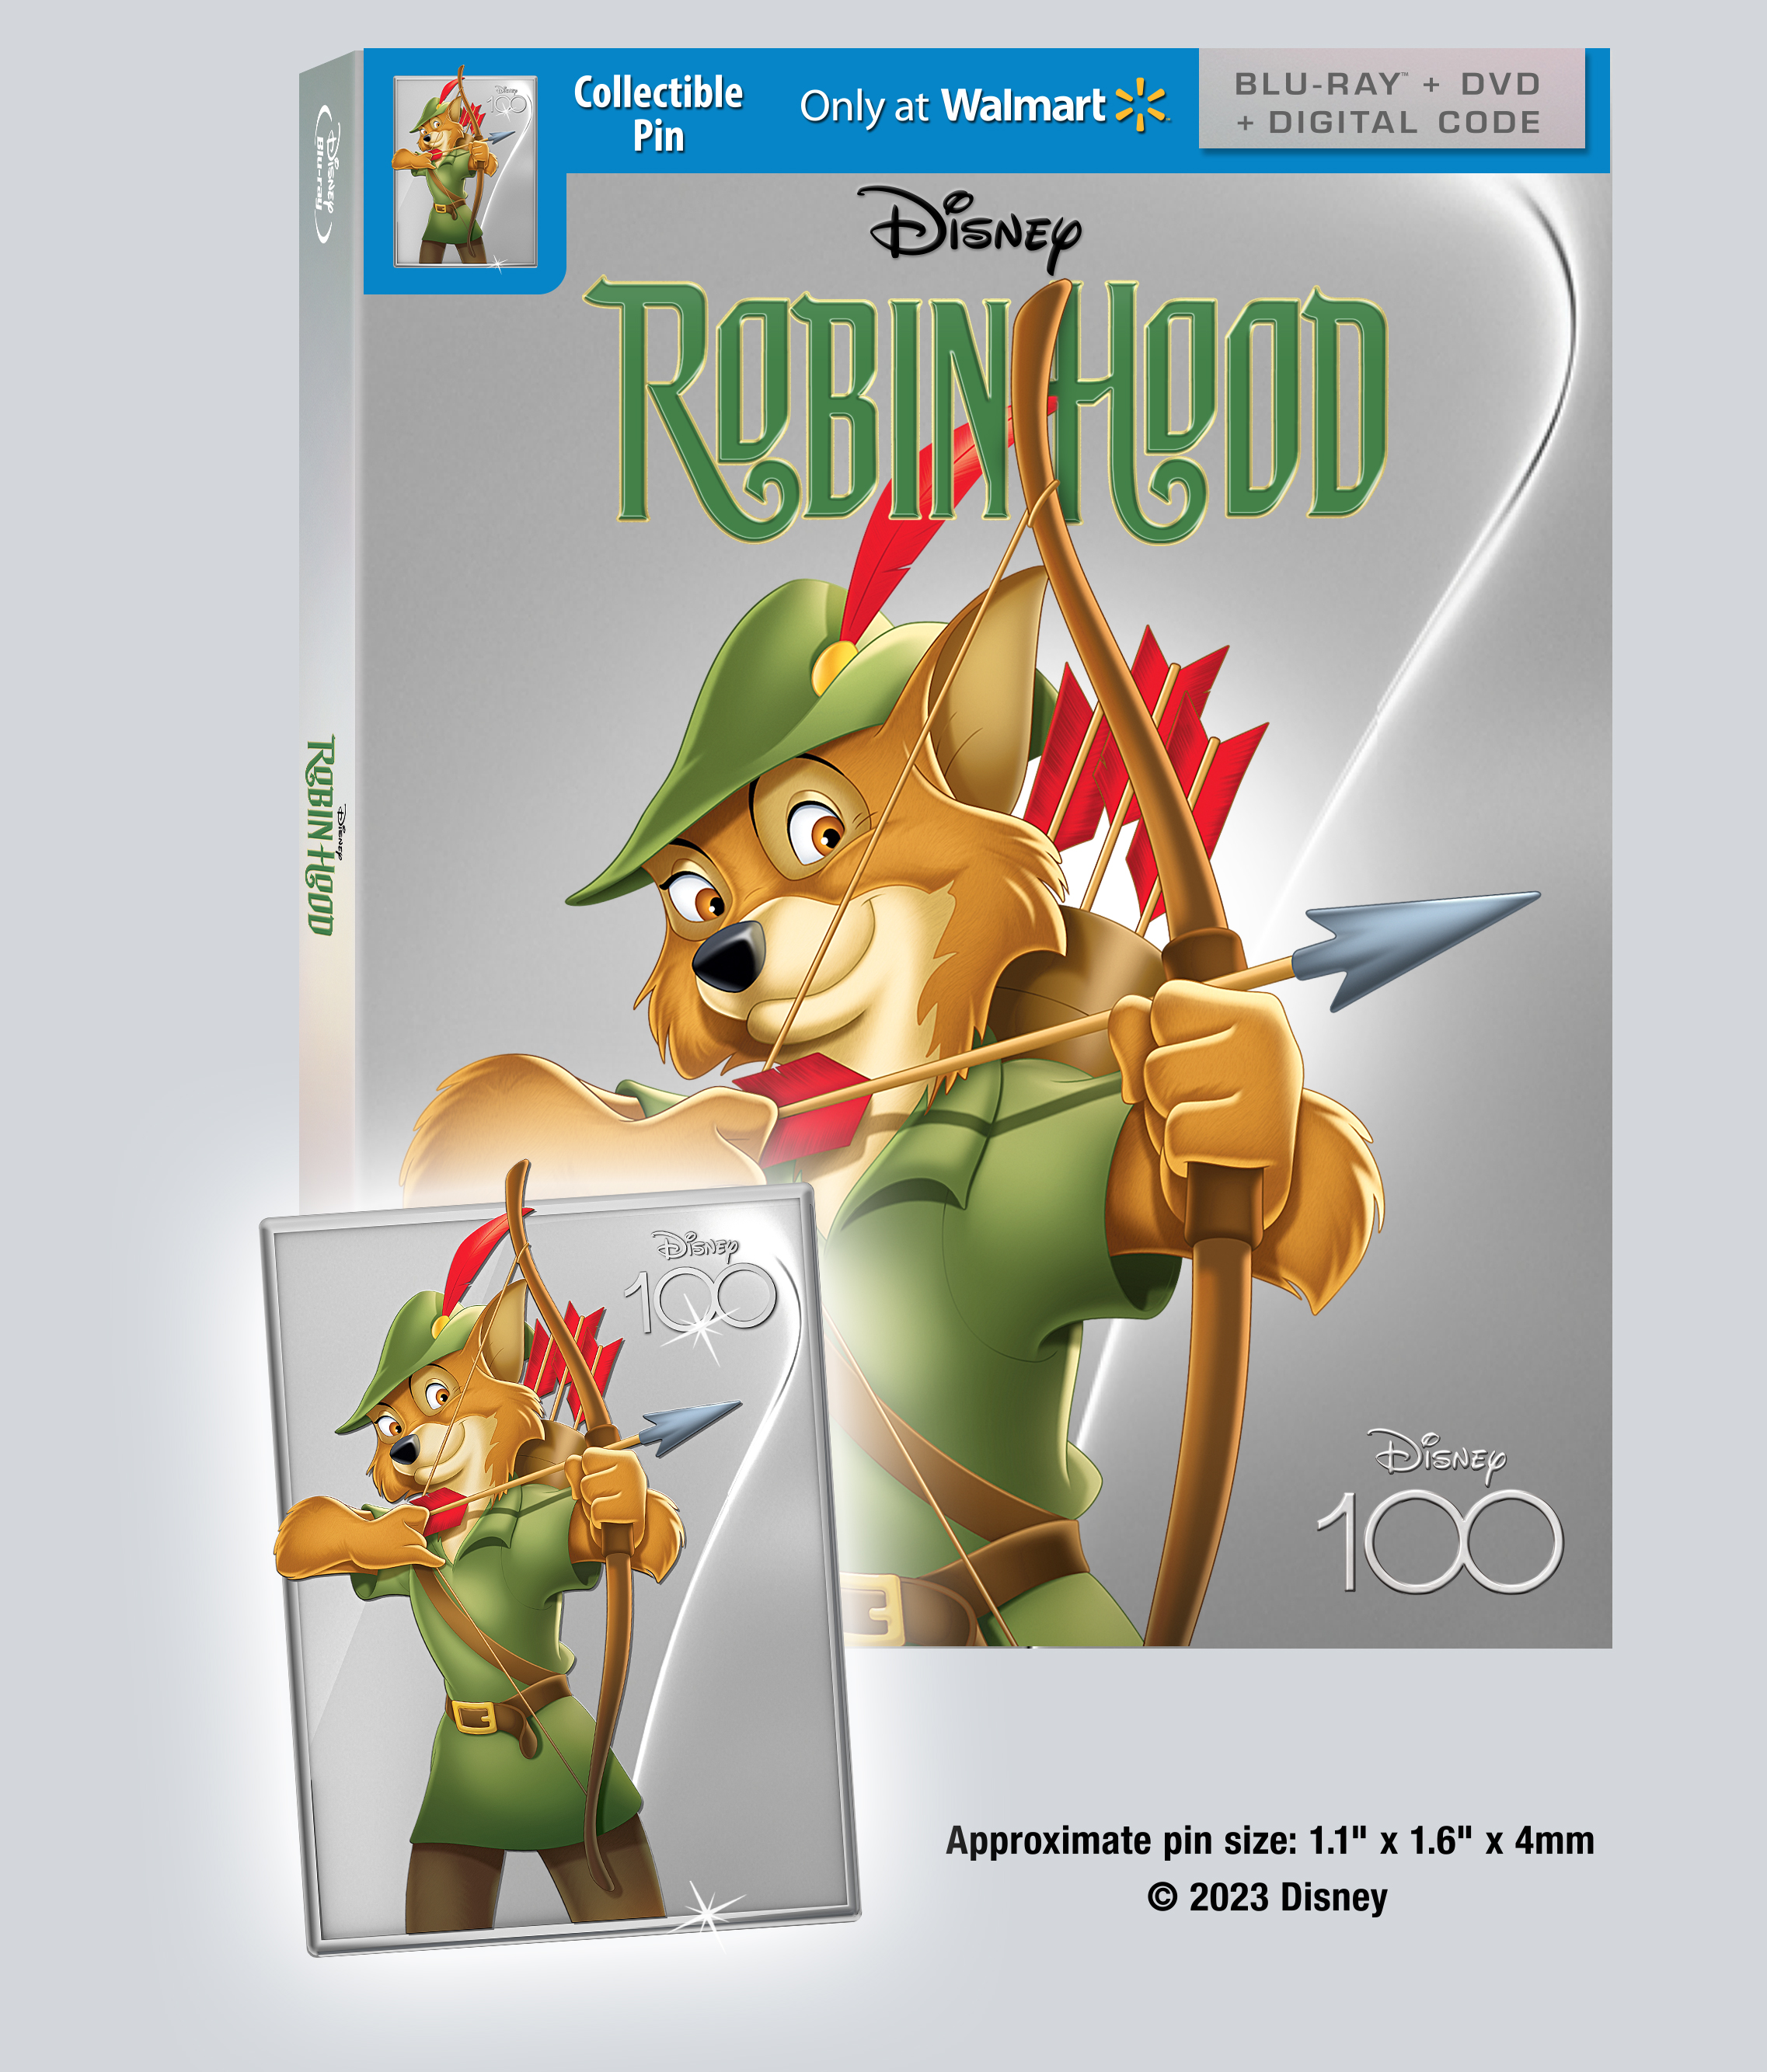 Robin Hood - Disney100 Edition Walmart Exclusive (Blu-ray + DVD + Digital Code) - image 5 of 11